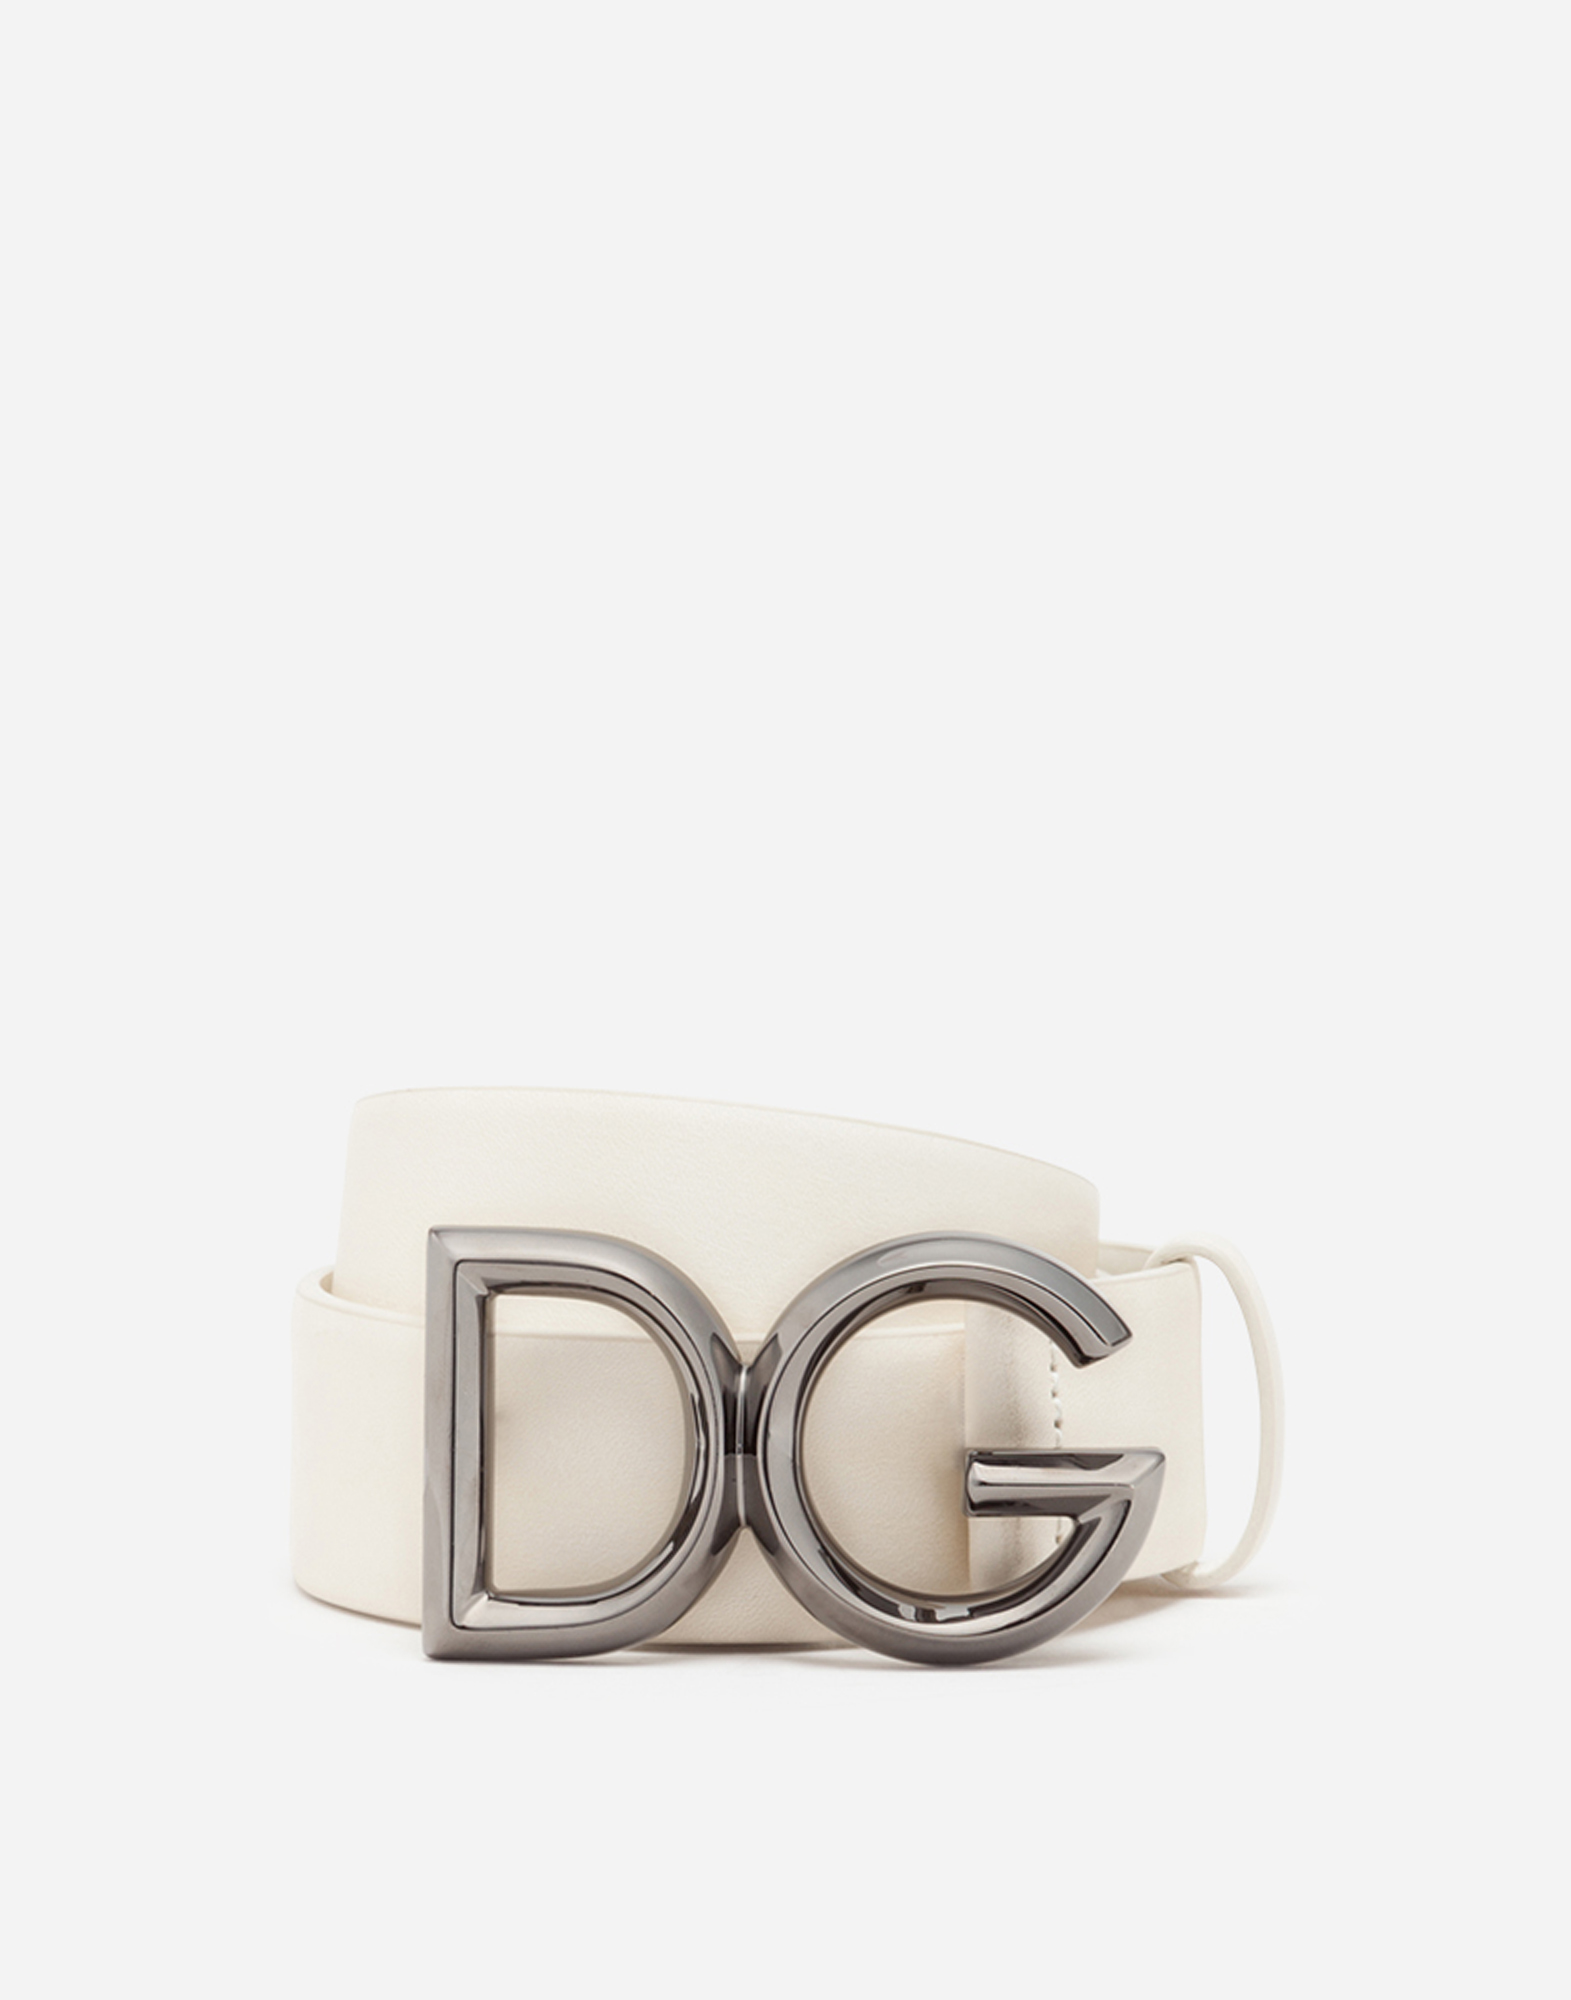 Cowhide belt with DG logo in White/Ruthenium